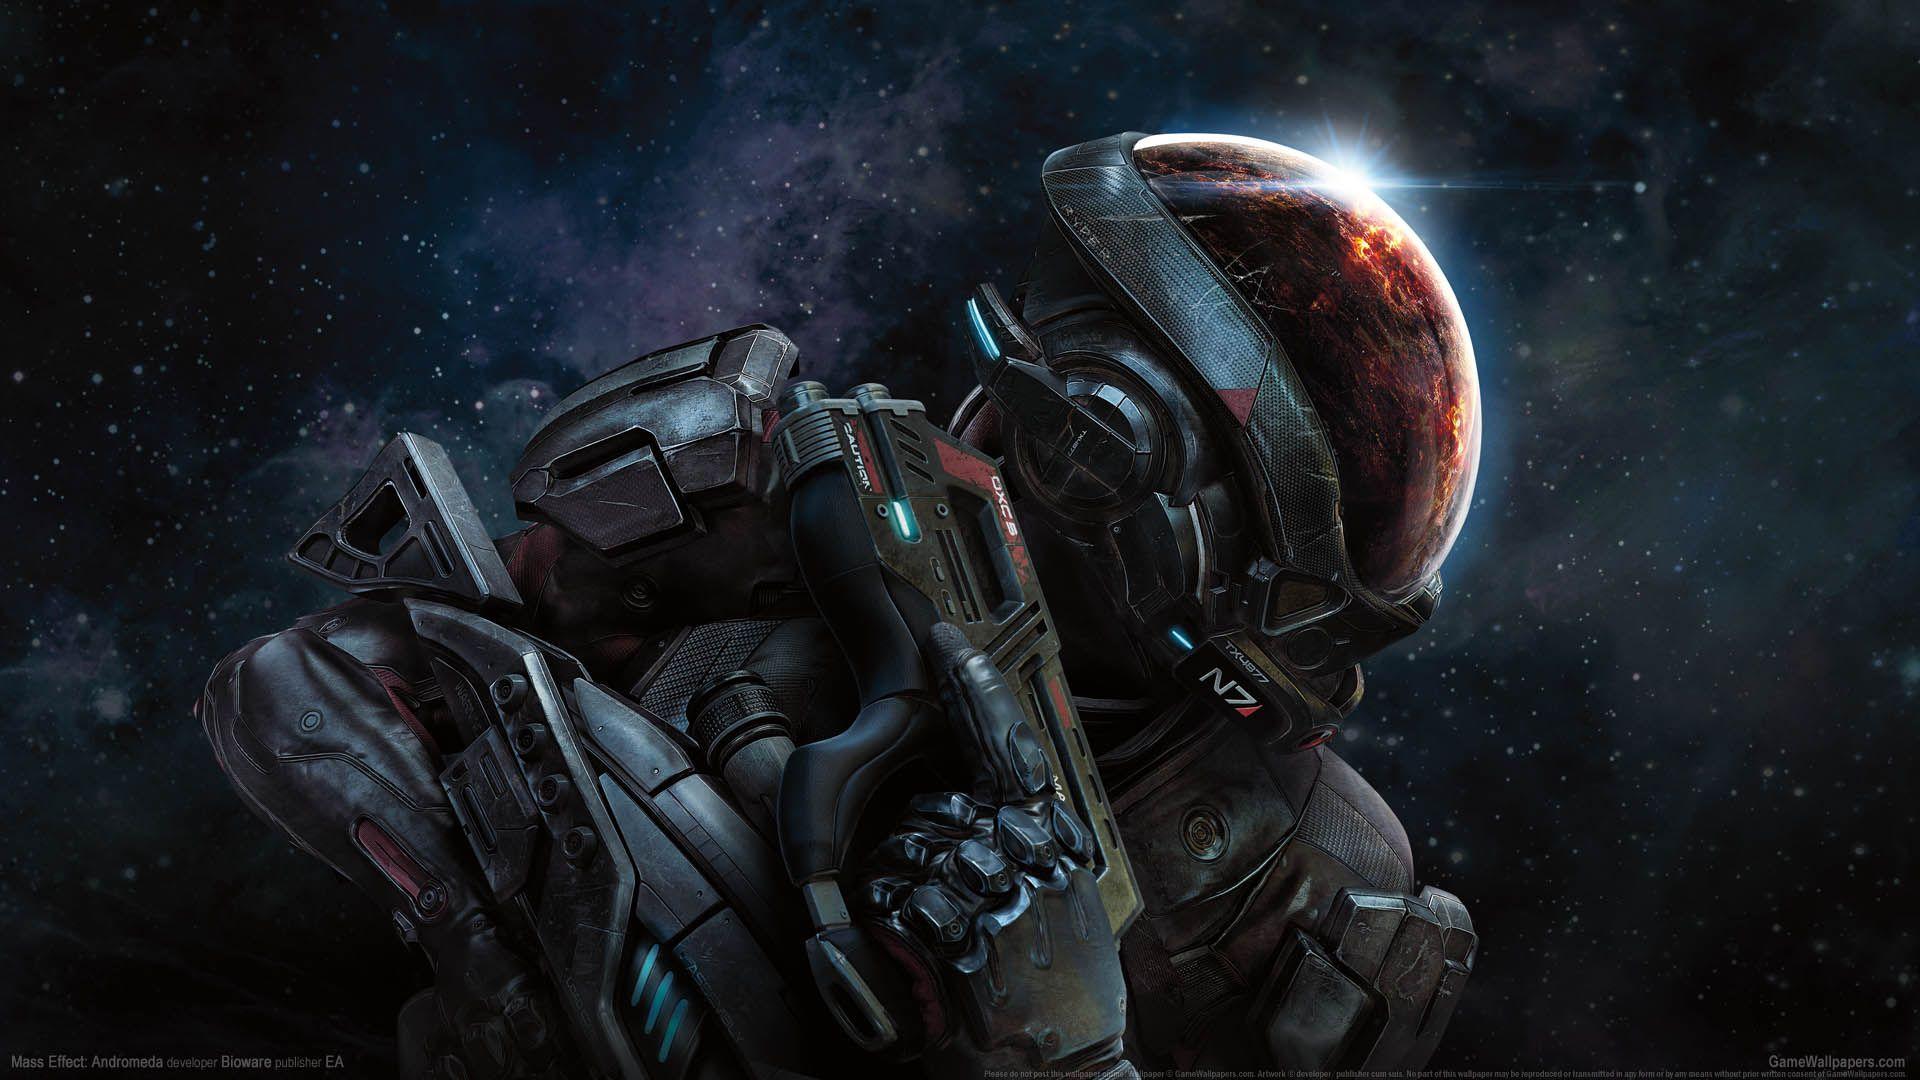 Mass Effect: Andromeda wallpaper or desktop background